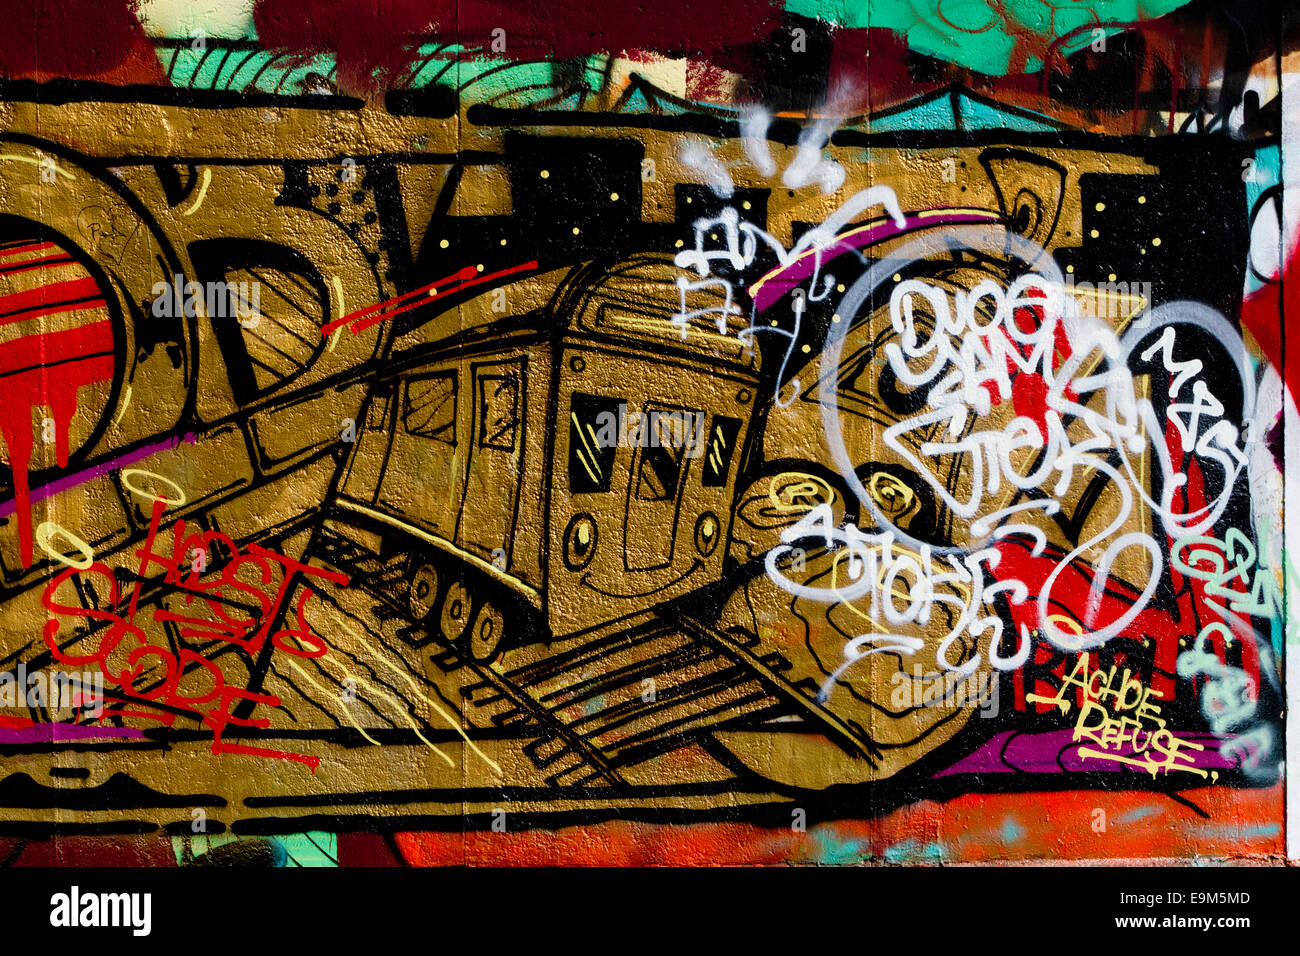 Graffiti street art Berlin Wall train tags colour Stock Photo